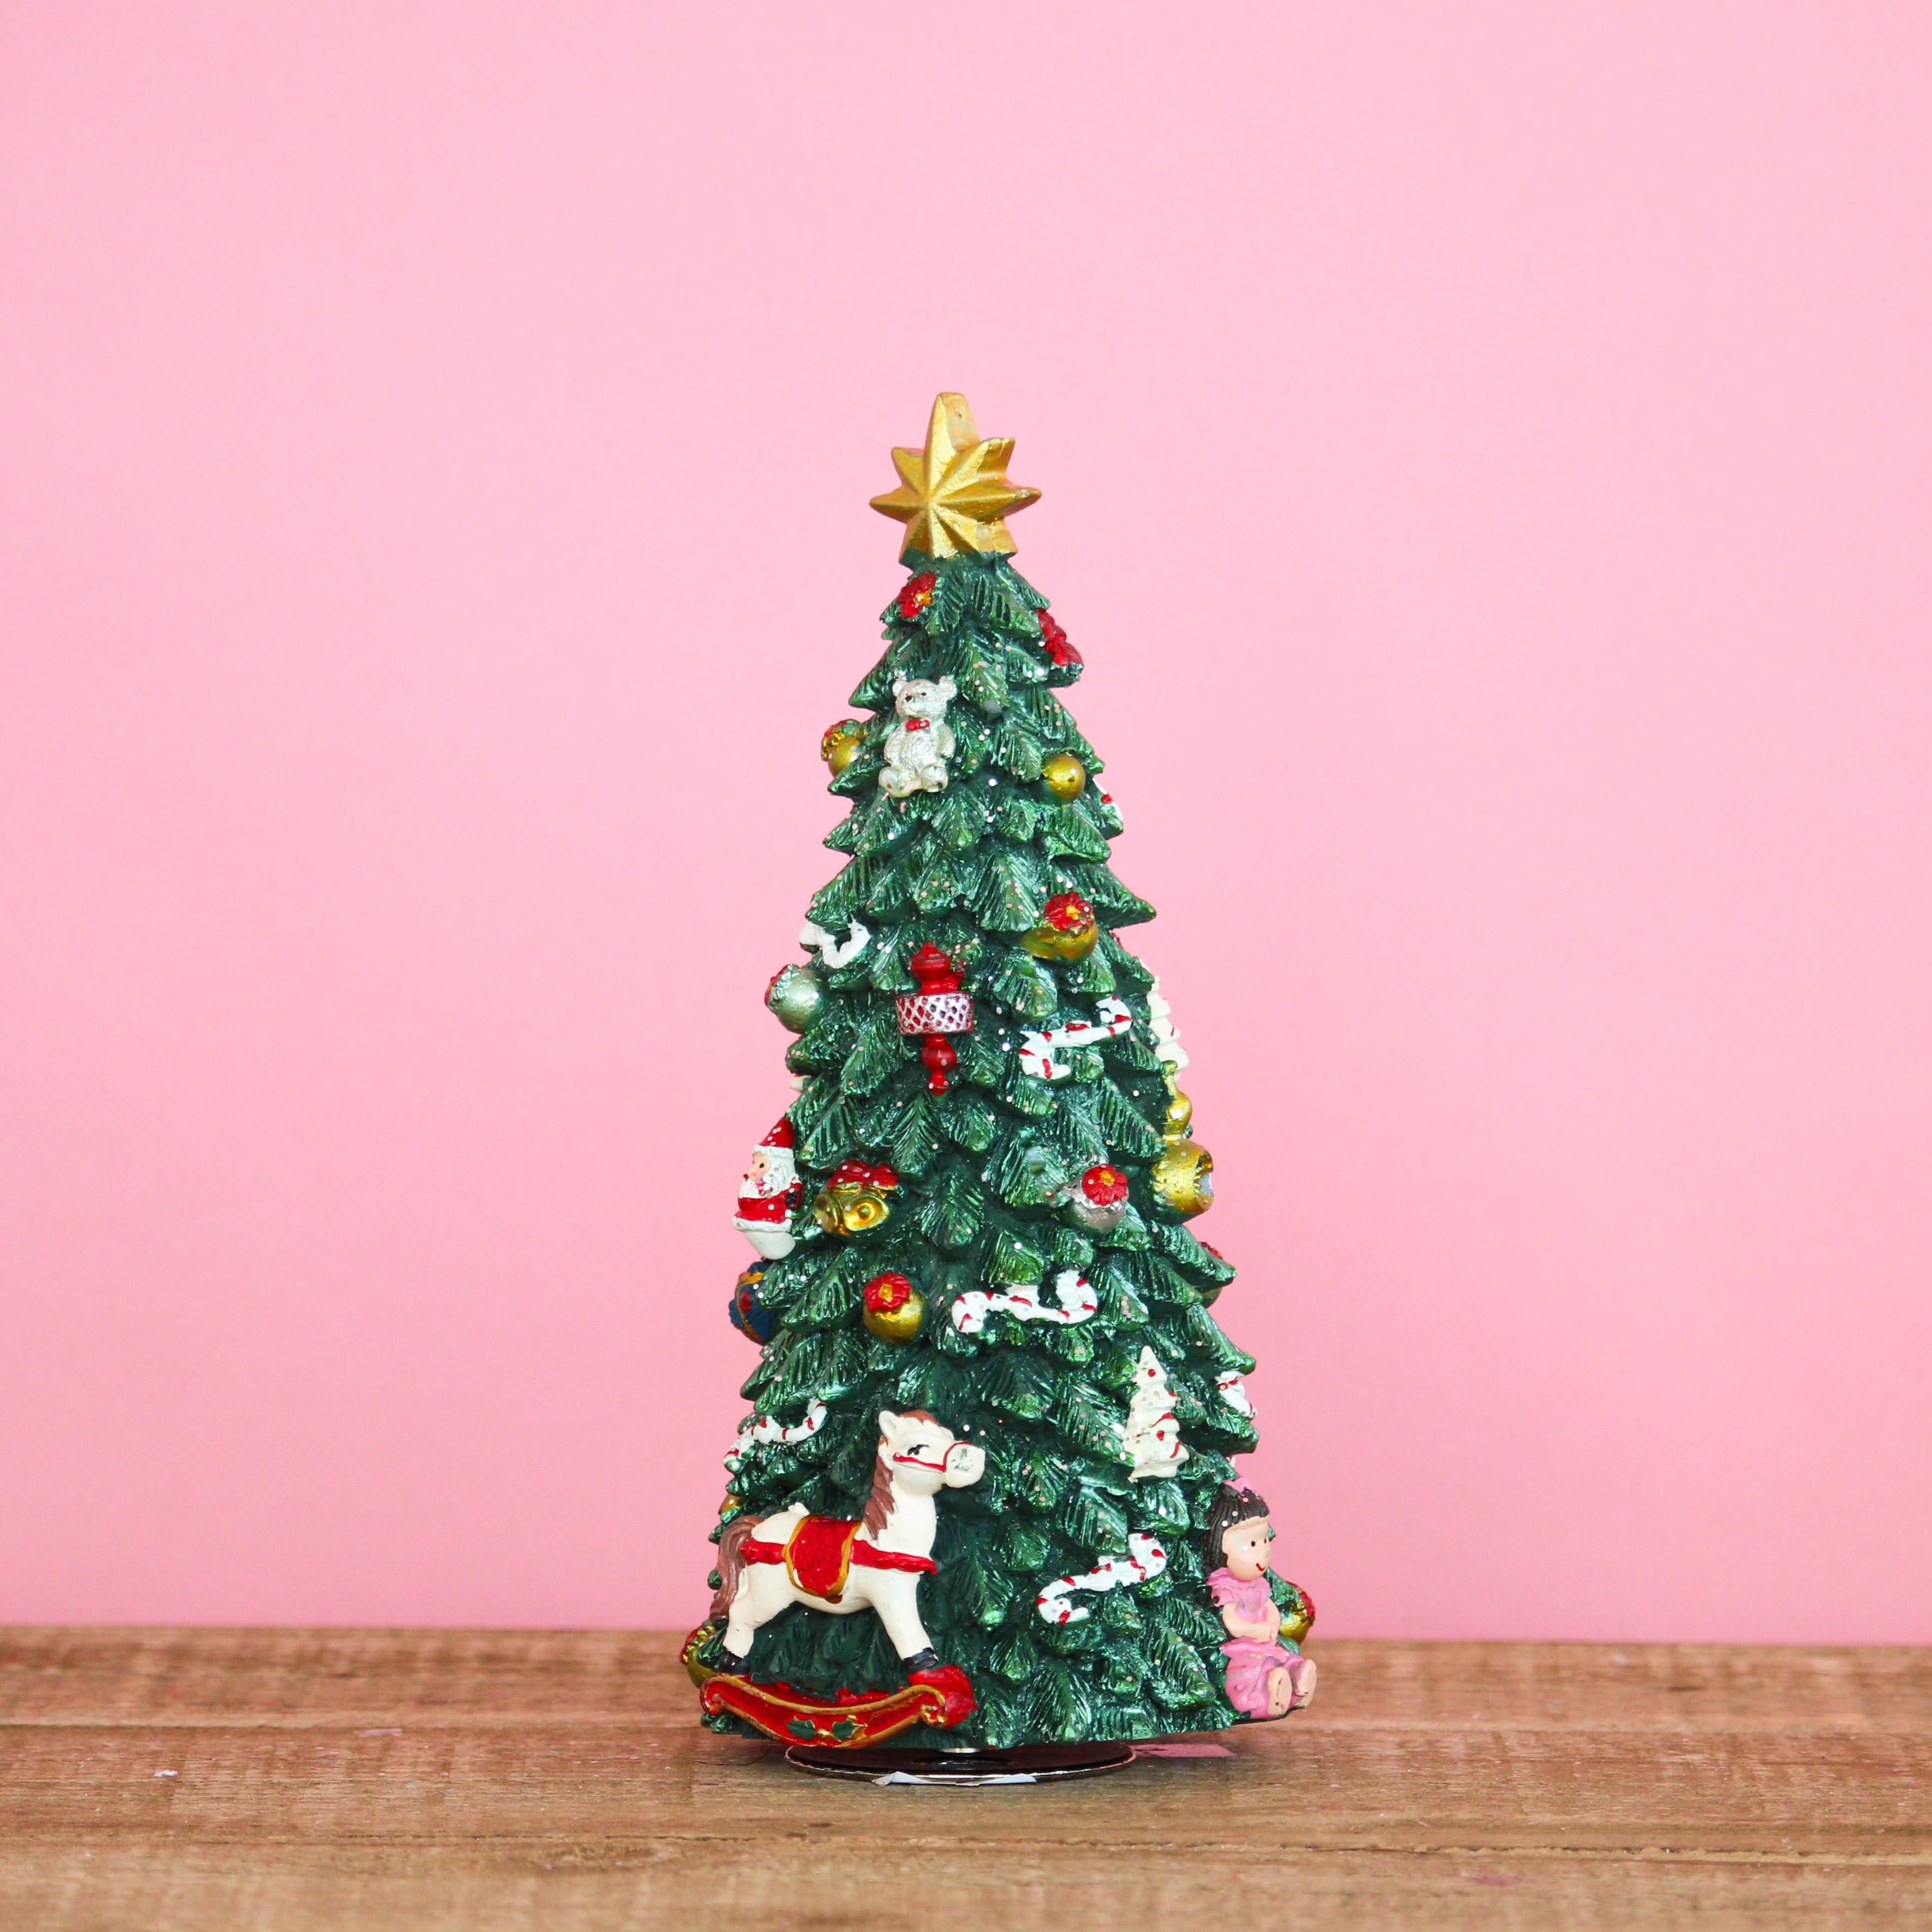 Revolving Musical Christmas Tree